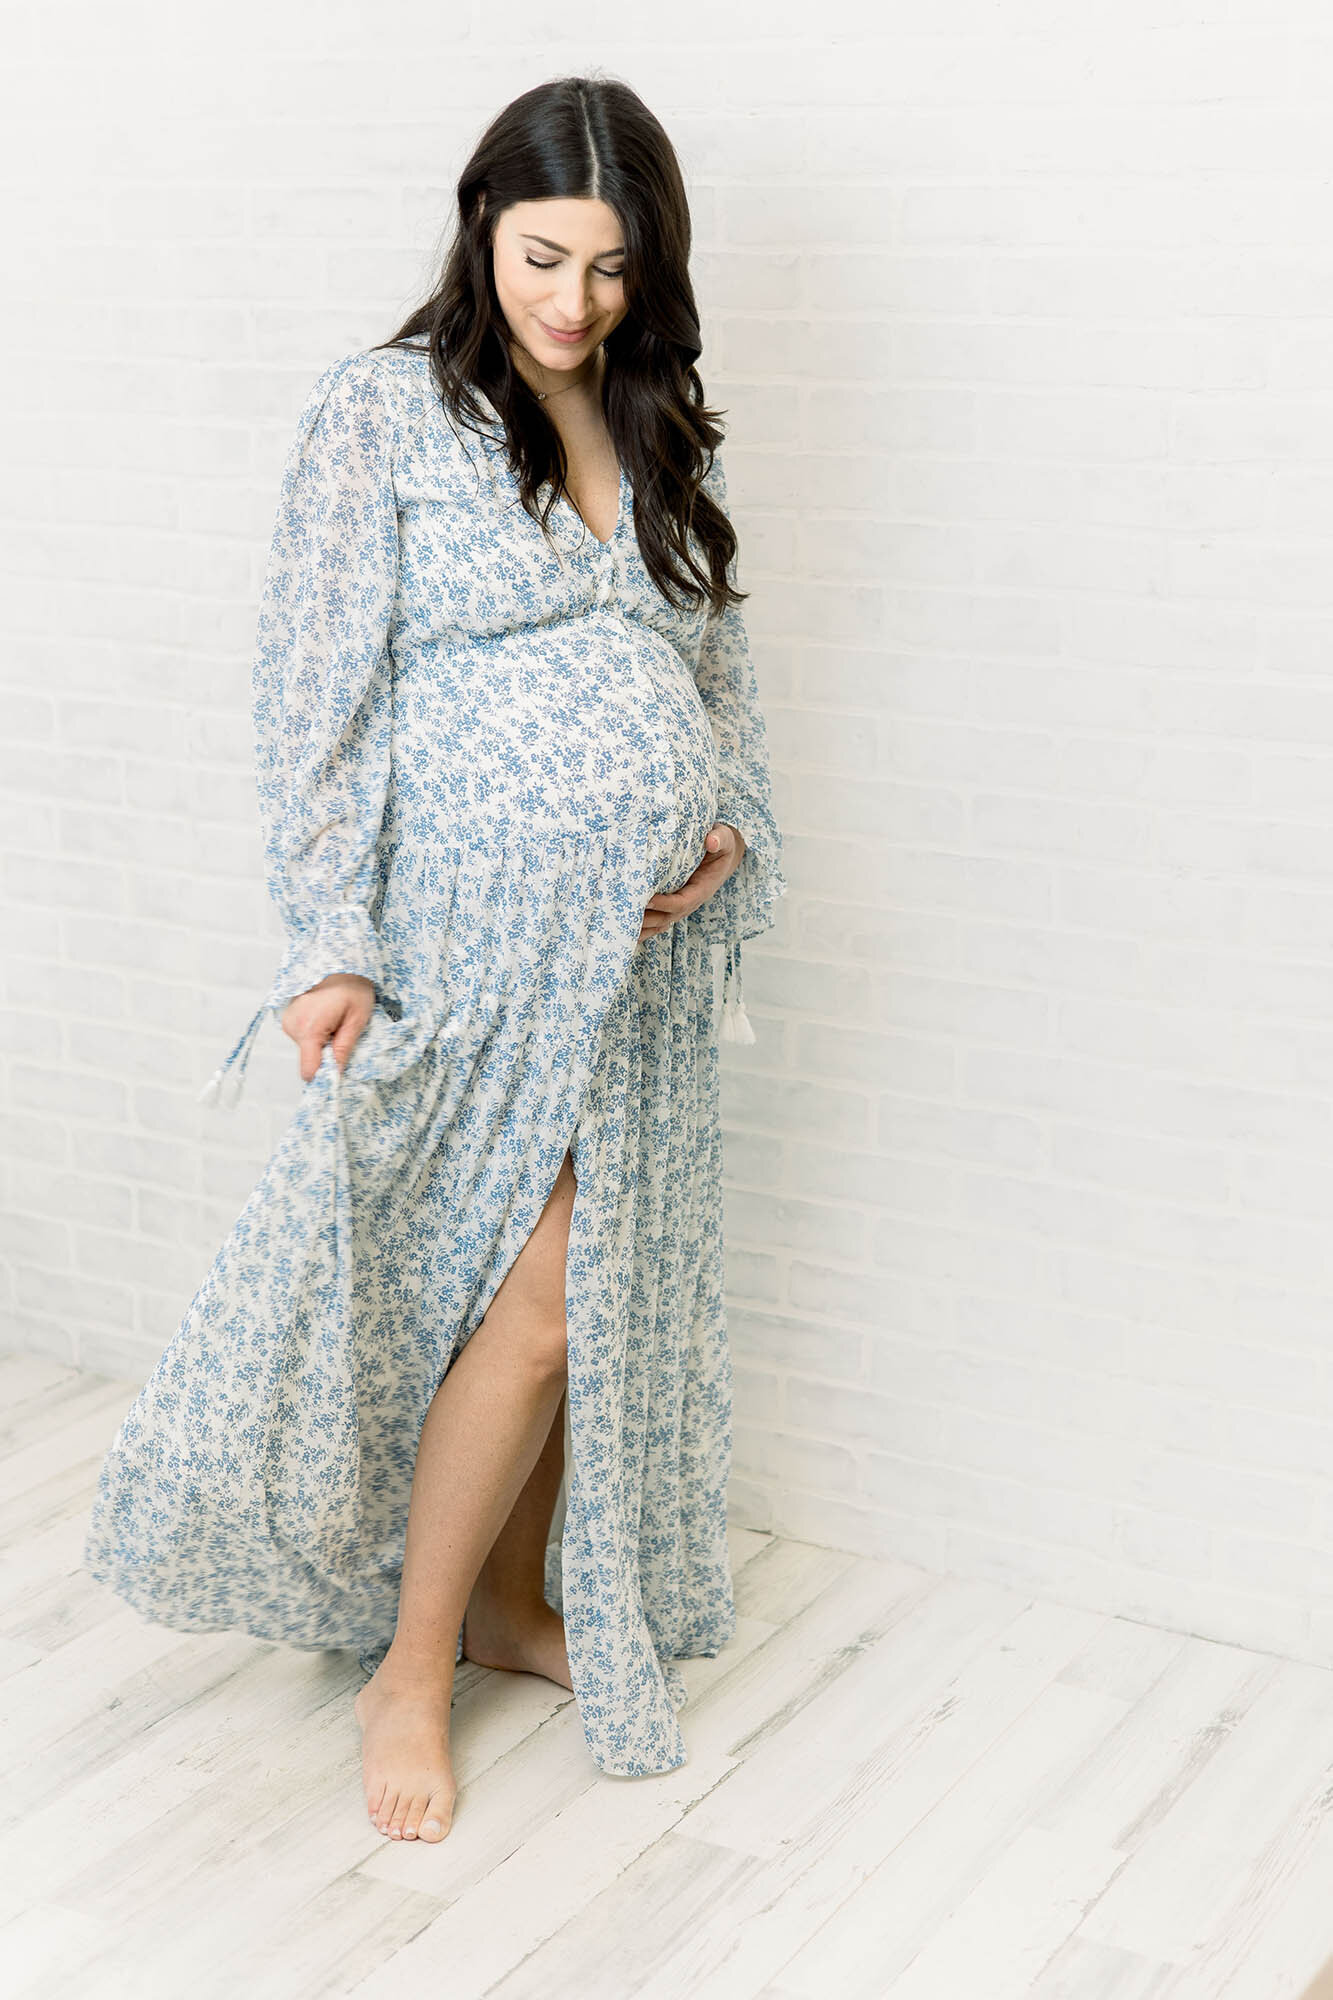 NH-Maternity-Photographer-003 copy